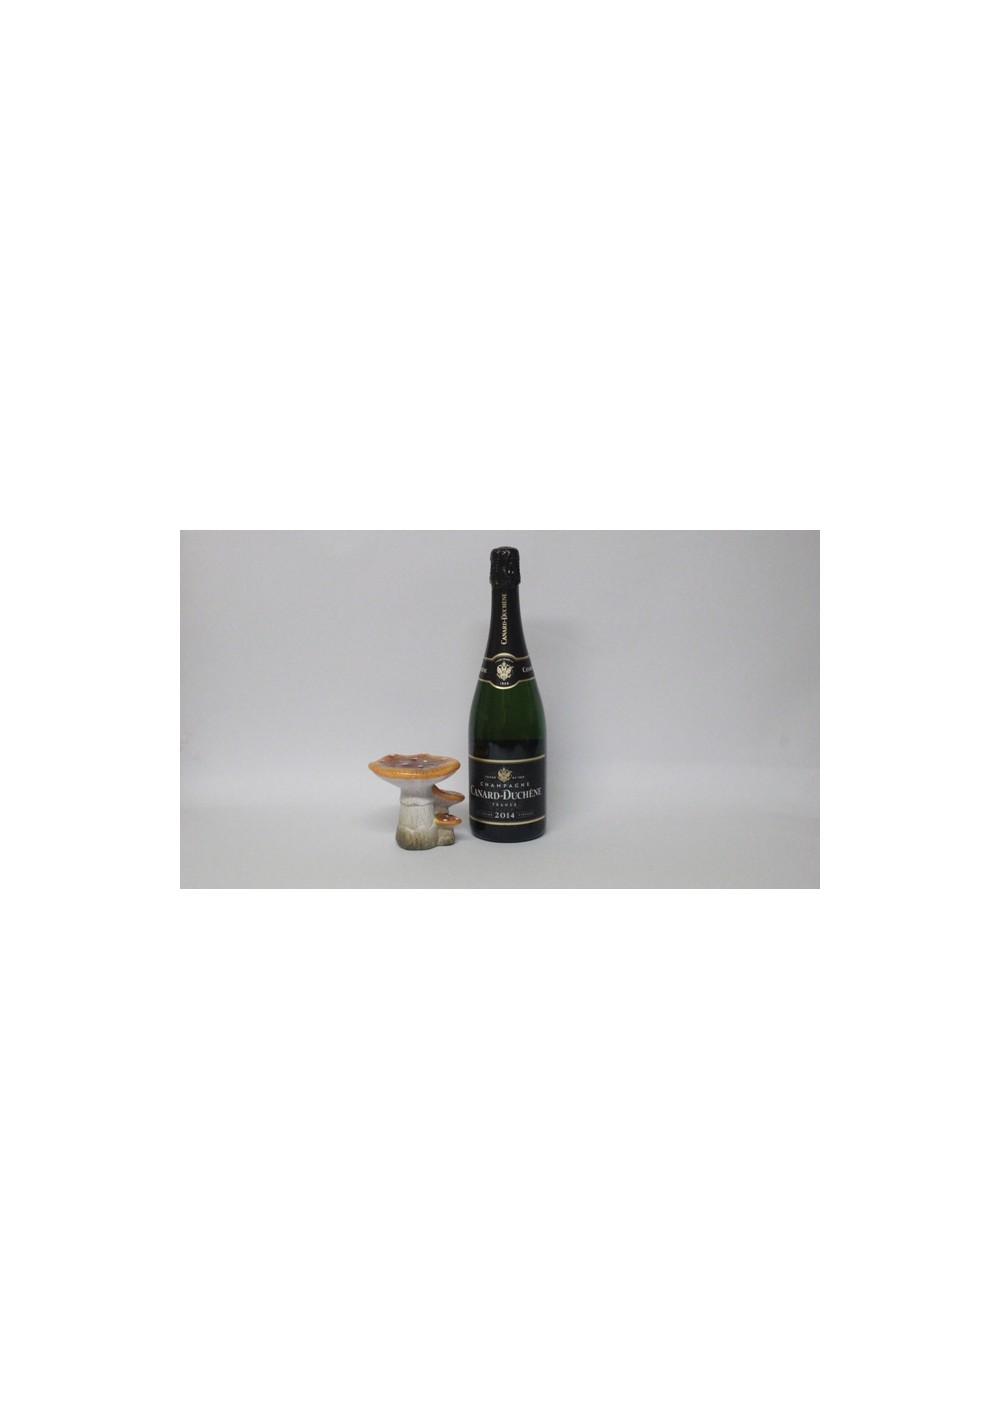 Champagne Canard Duchêne millésime 2014